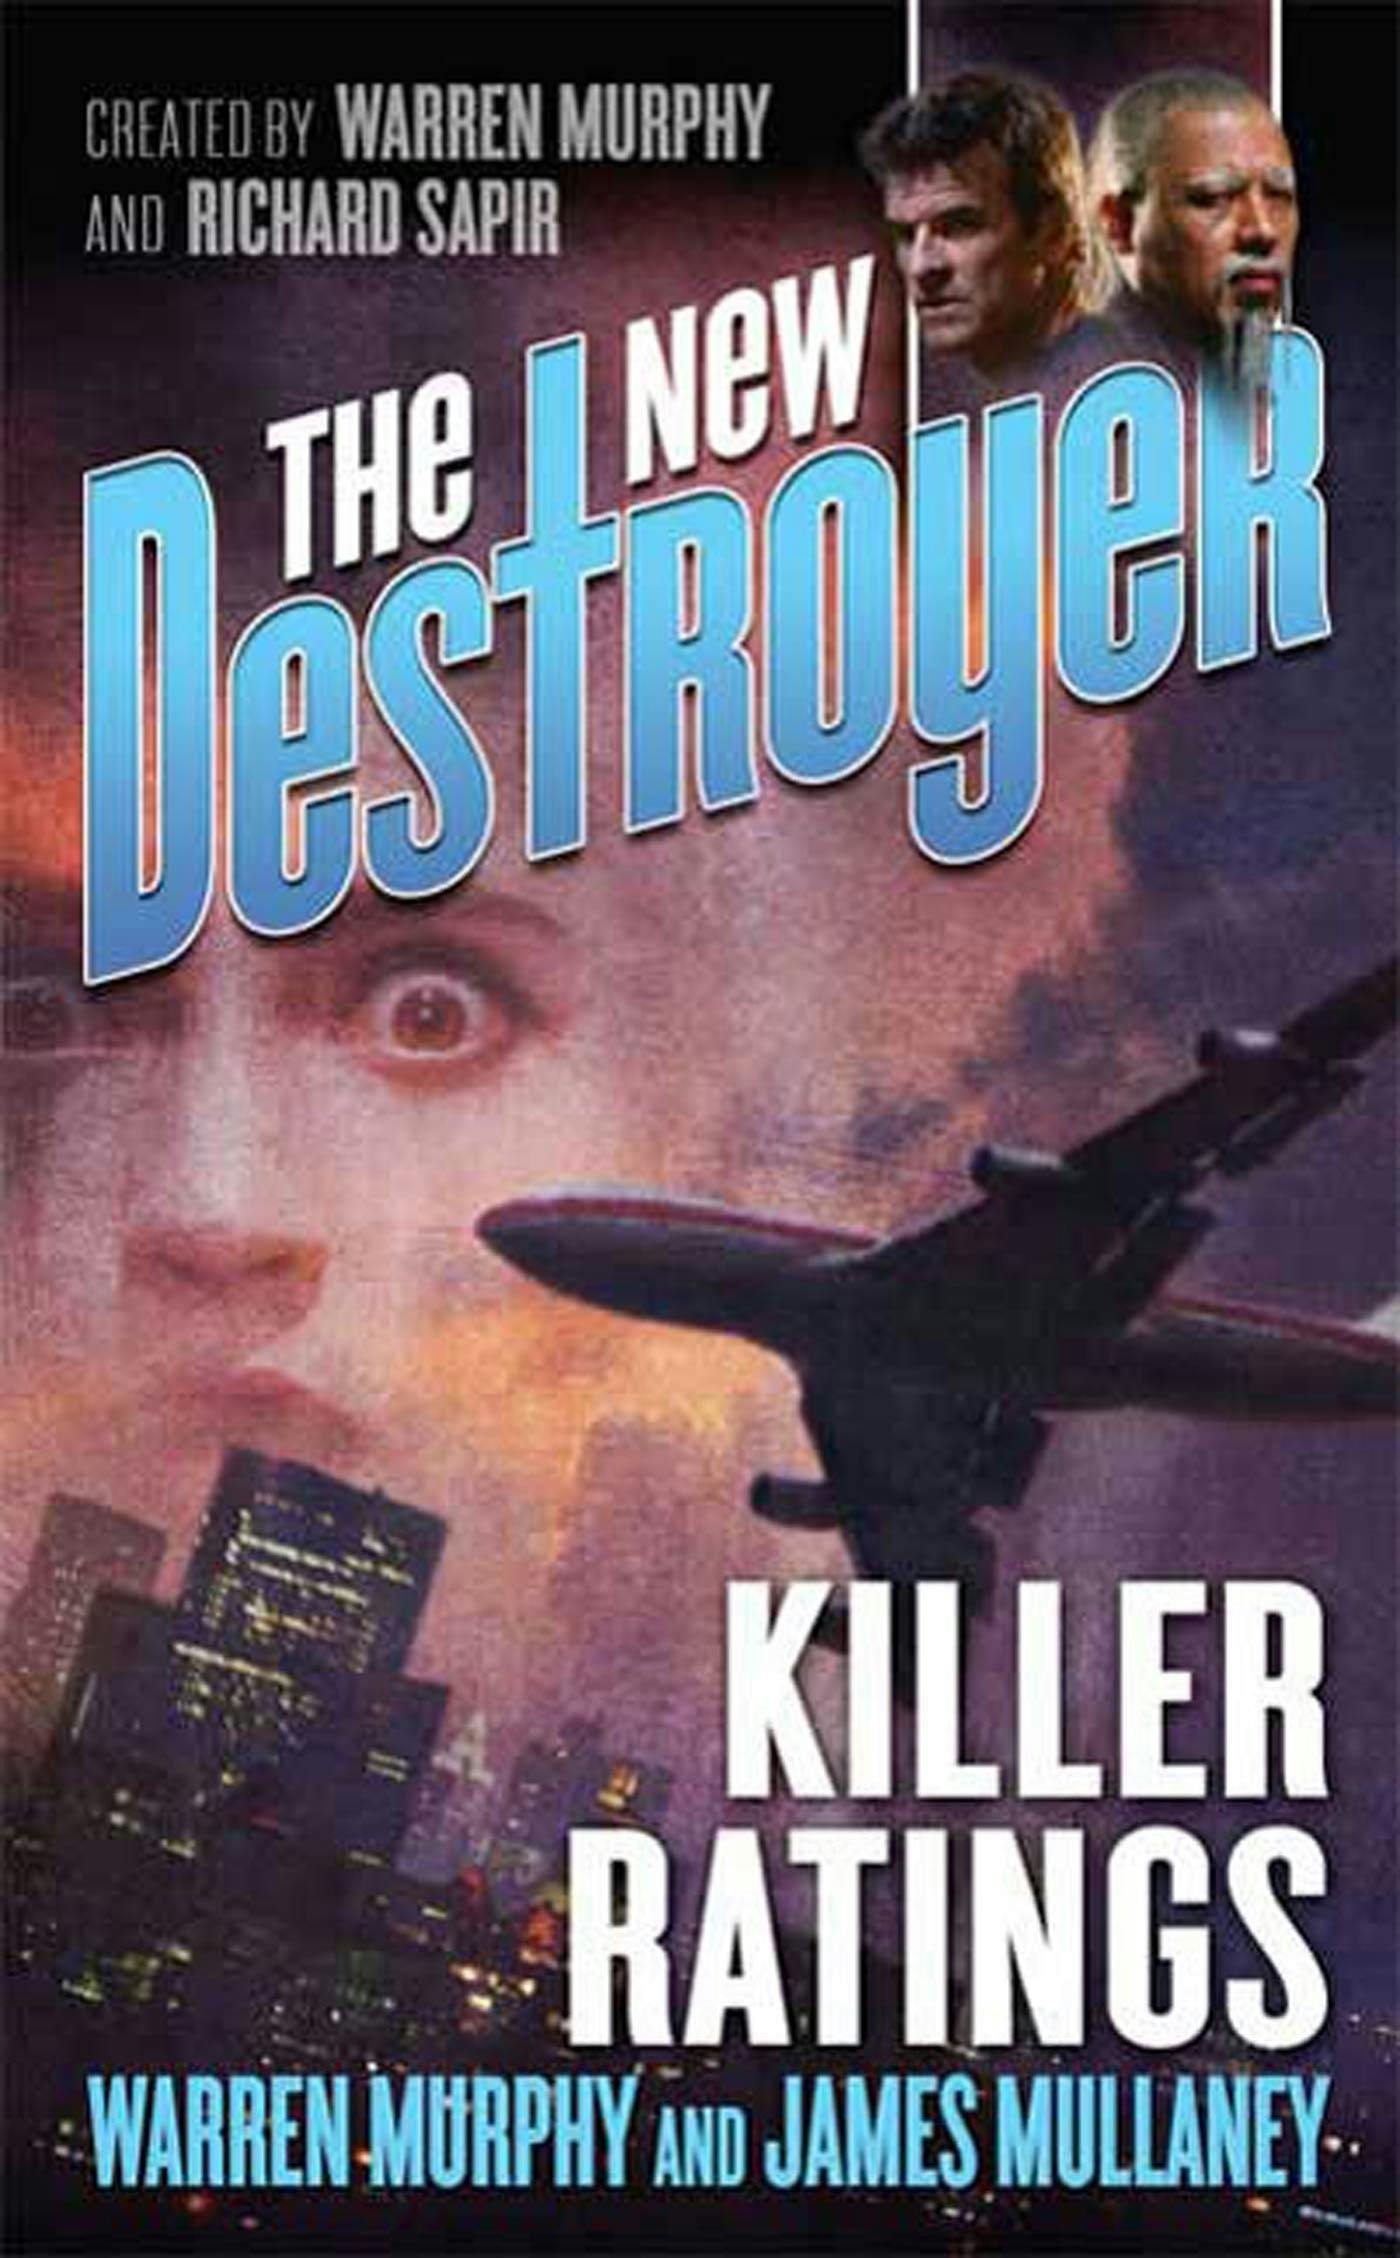 The New Destroyer: Killer Ratings